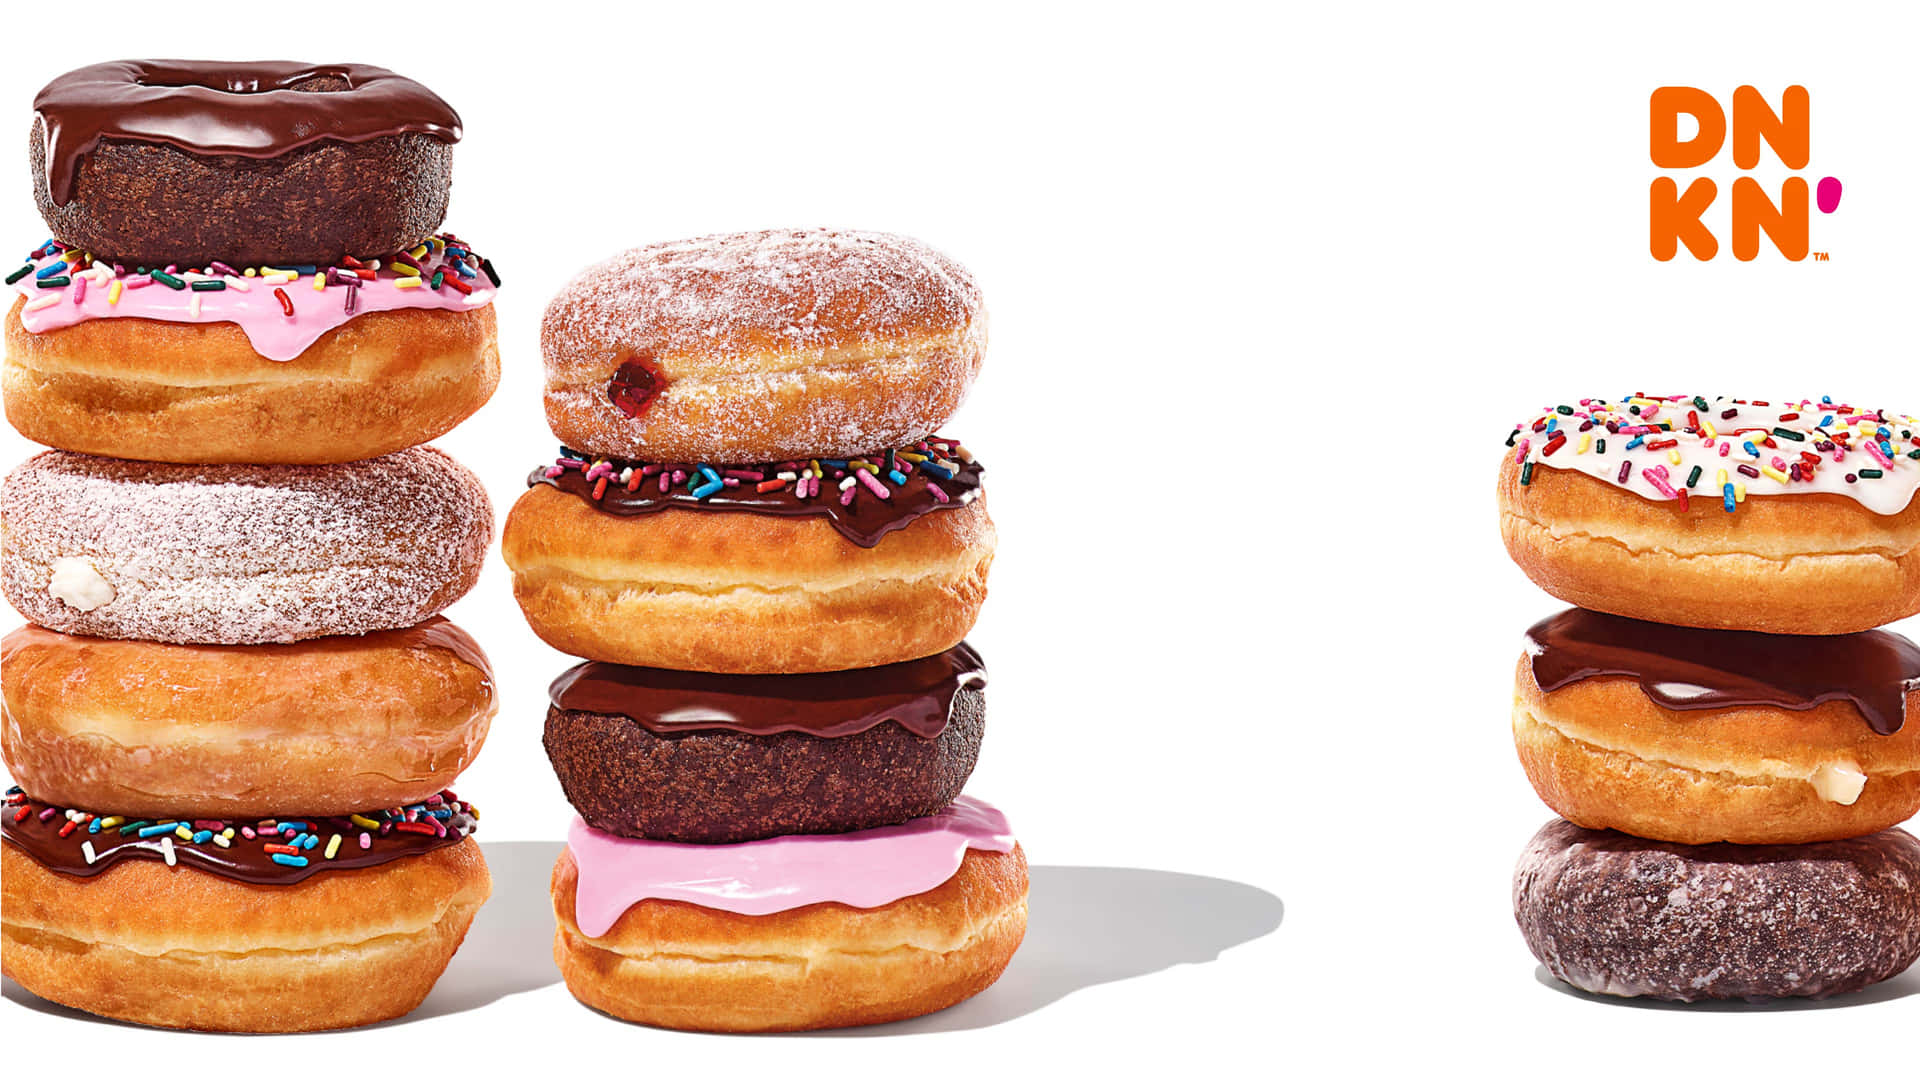 Jubldin Dag Med Klassiske Dunkin Donuts.